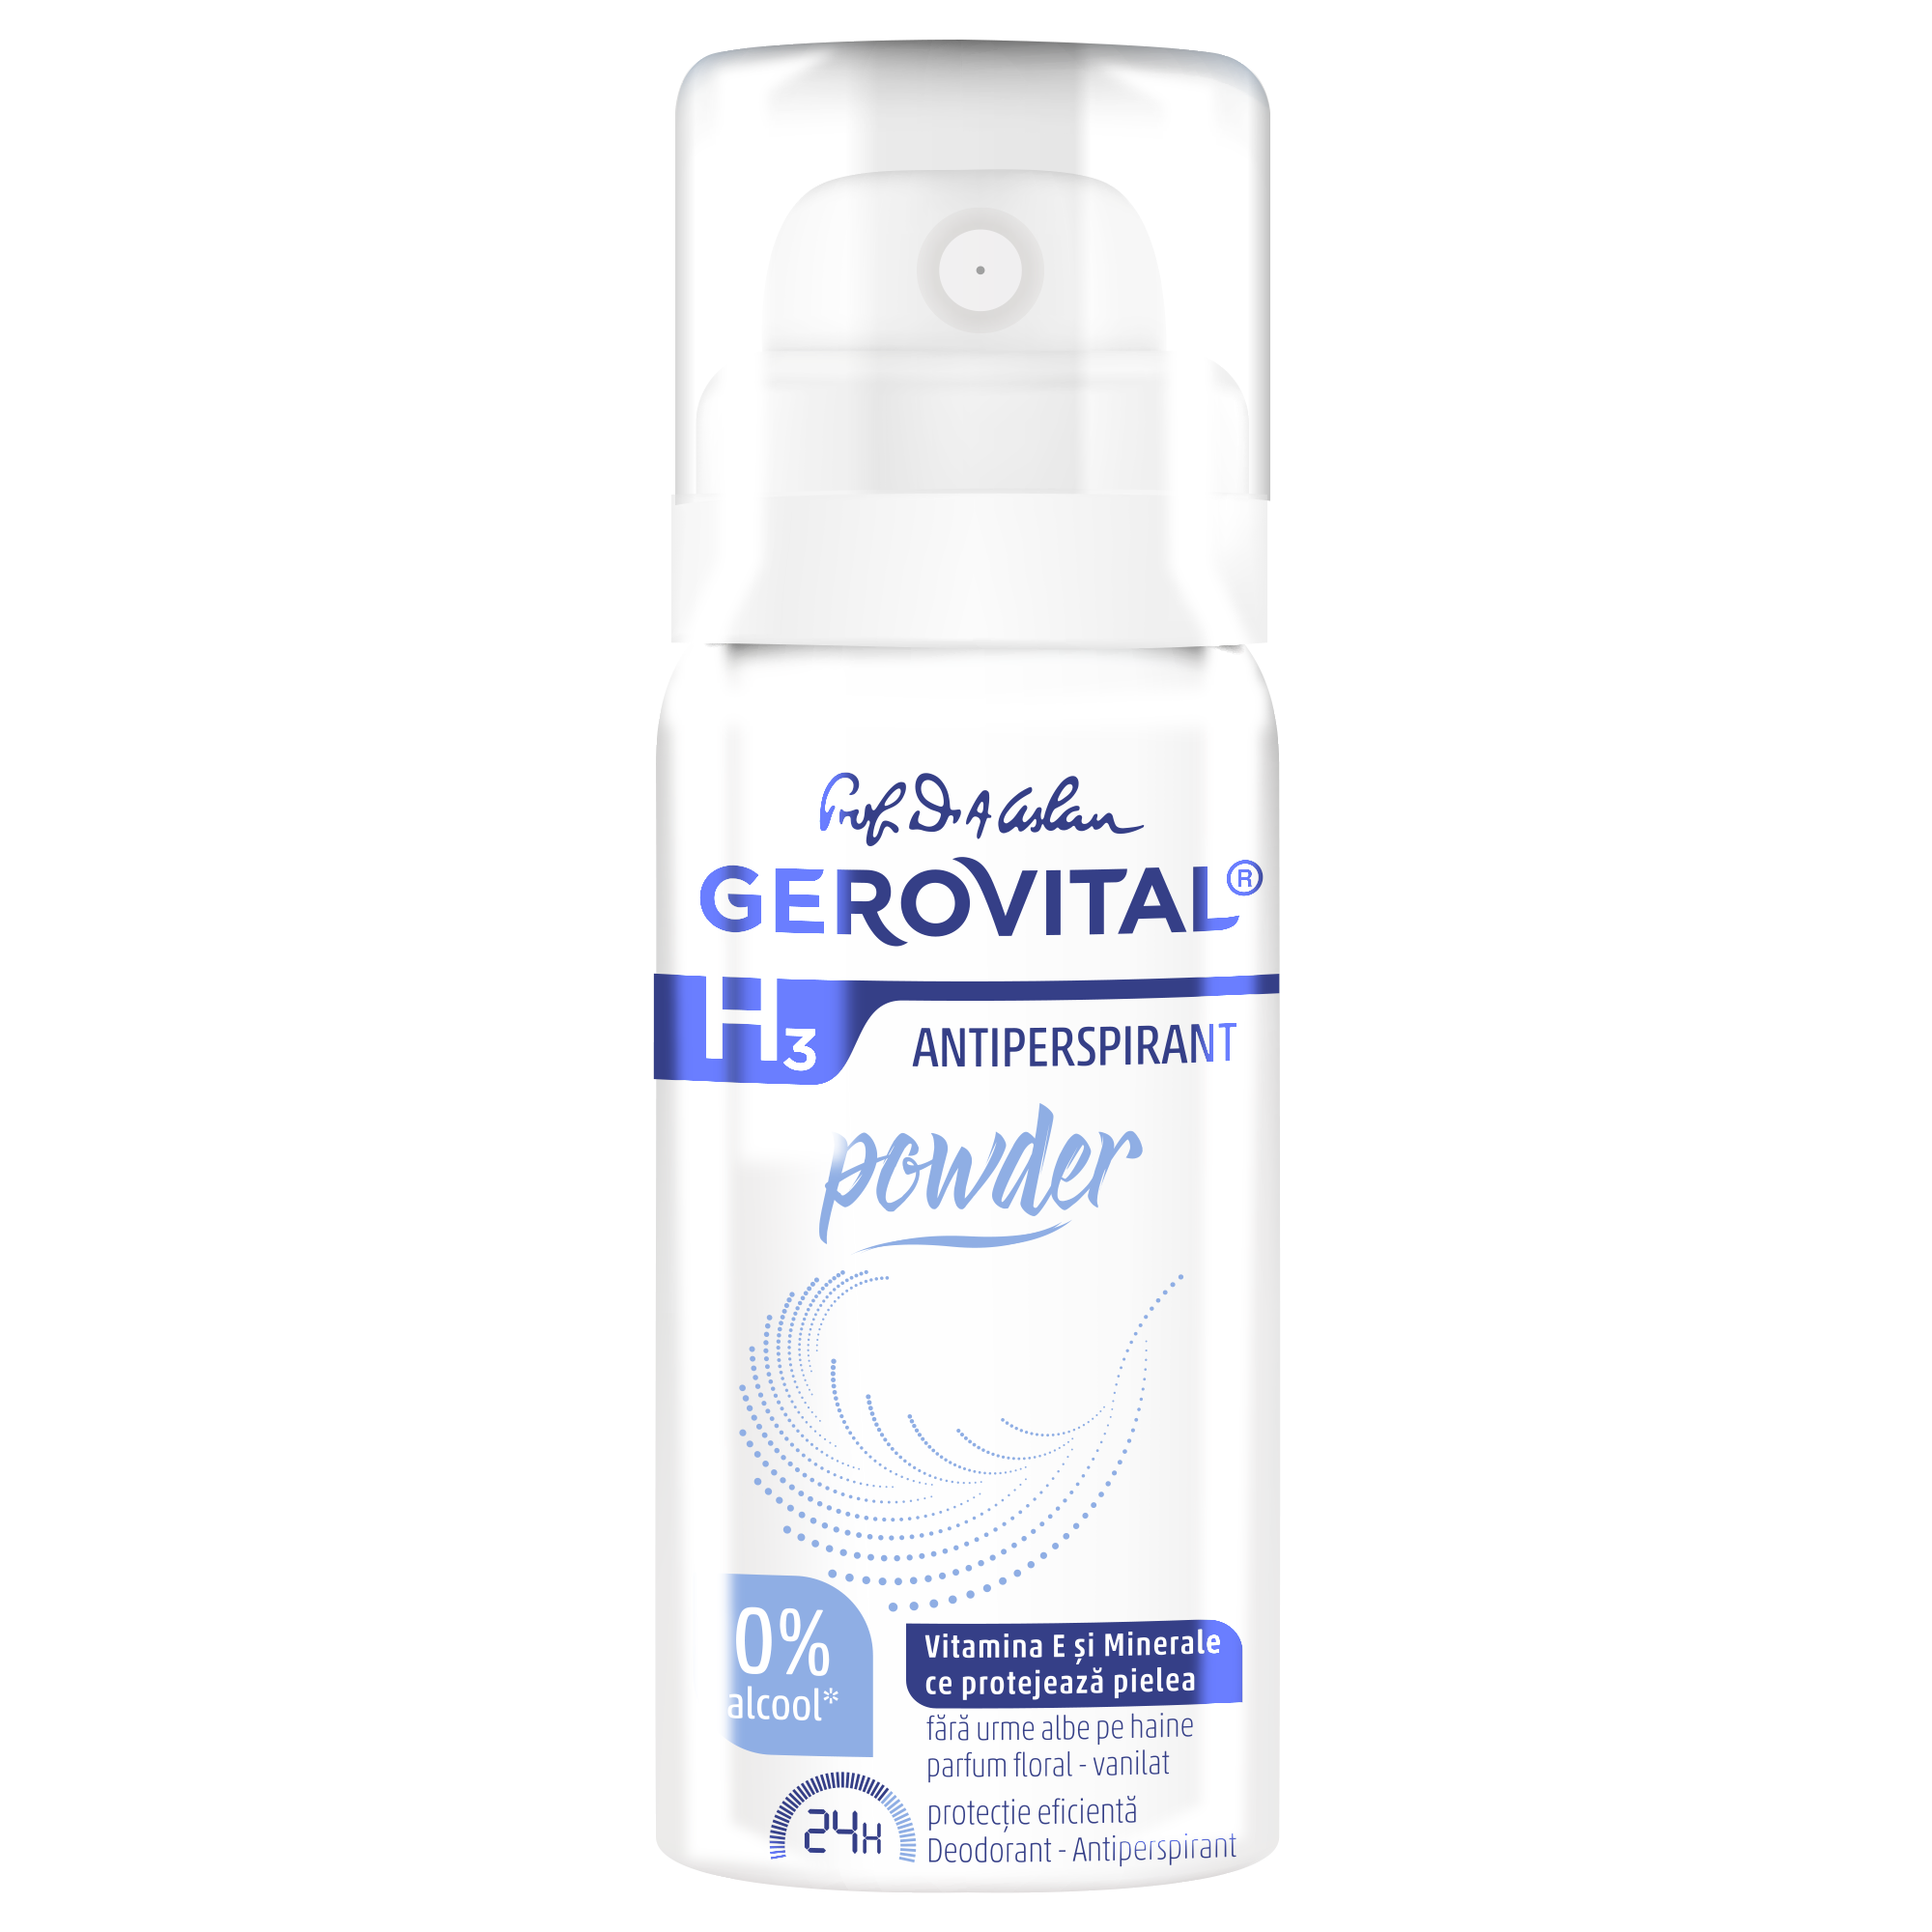 Deodorant spray Gerovital H3 Antiperspirant, Powder, 40 ml, Gerovital